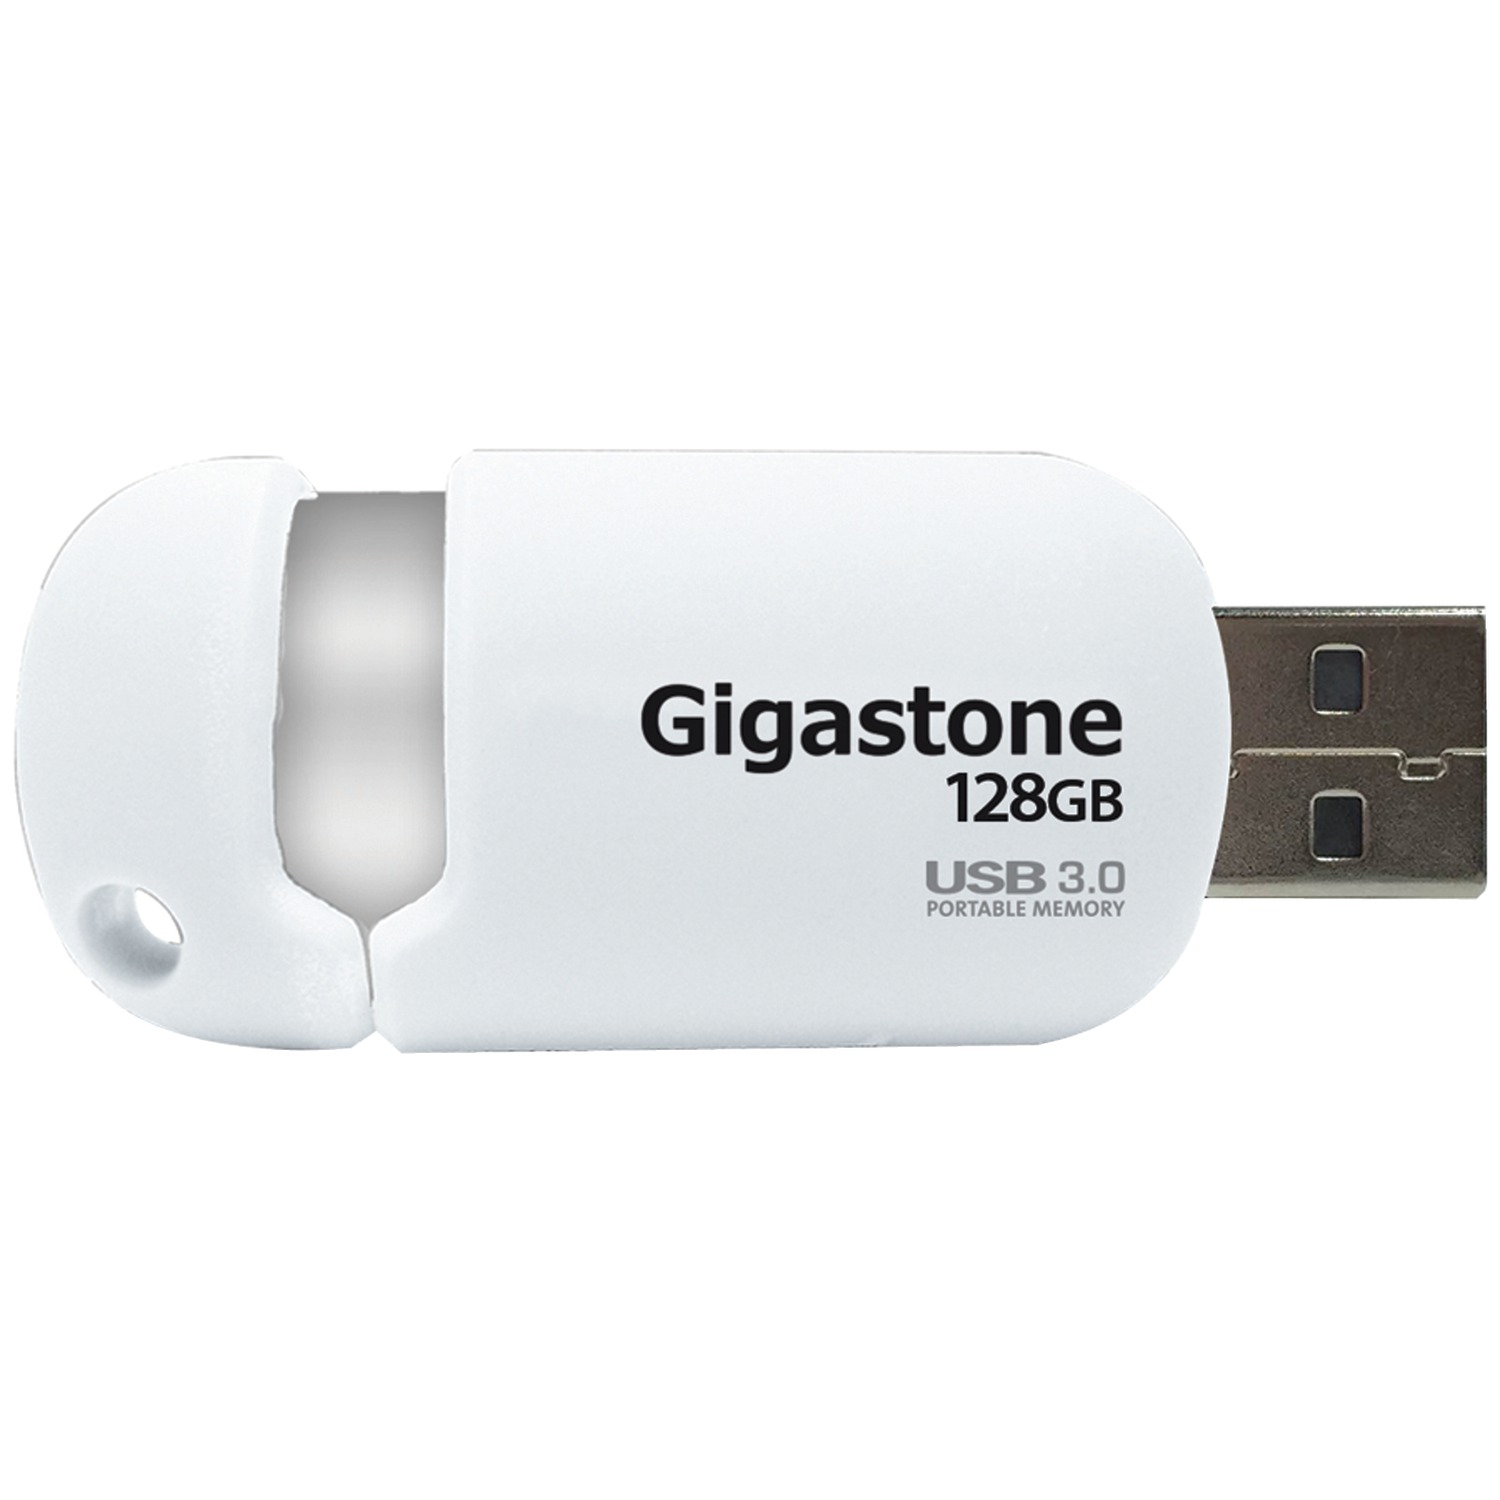 gigastone flash drive